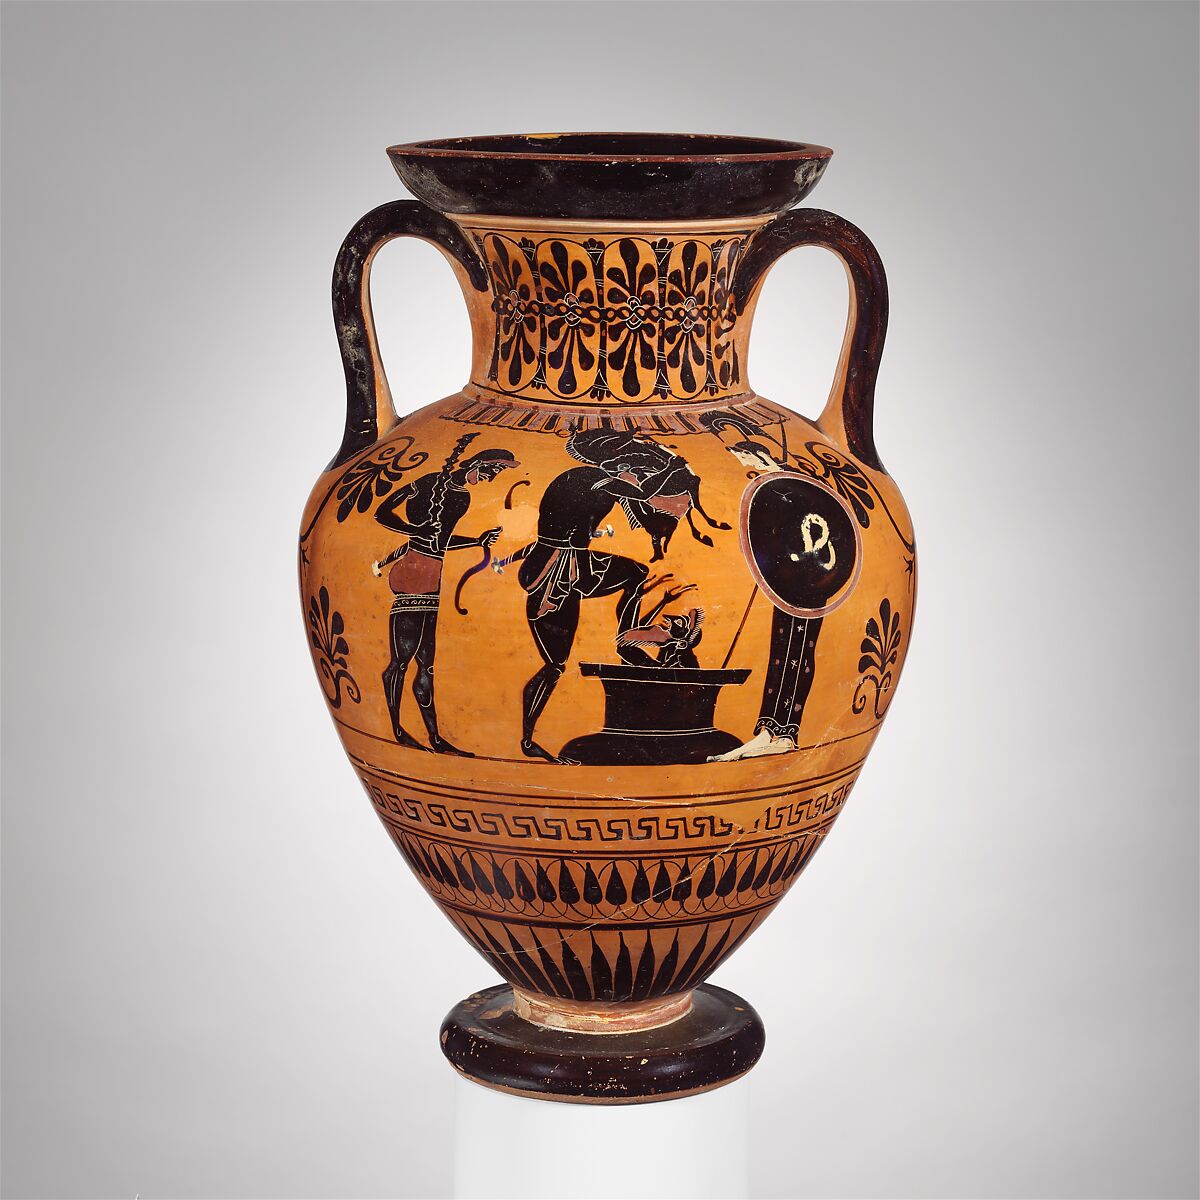 Terracotta neck-amphora (jar), Attributed to the Group of Toronto 305, Terracotta, Greek, Attic 